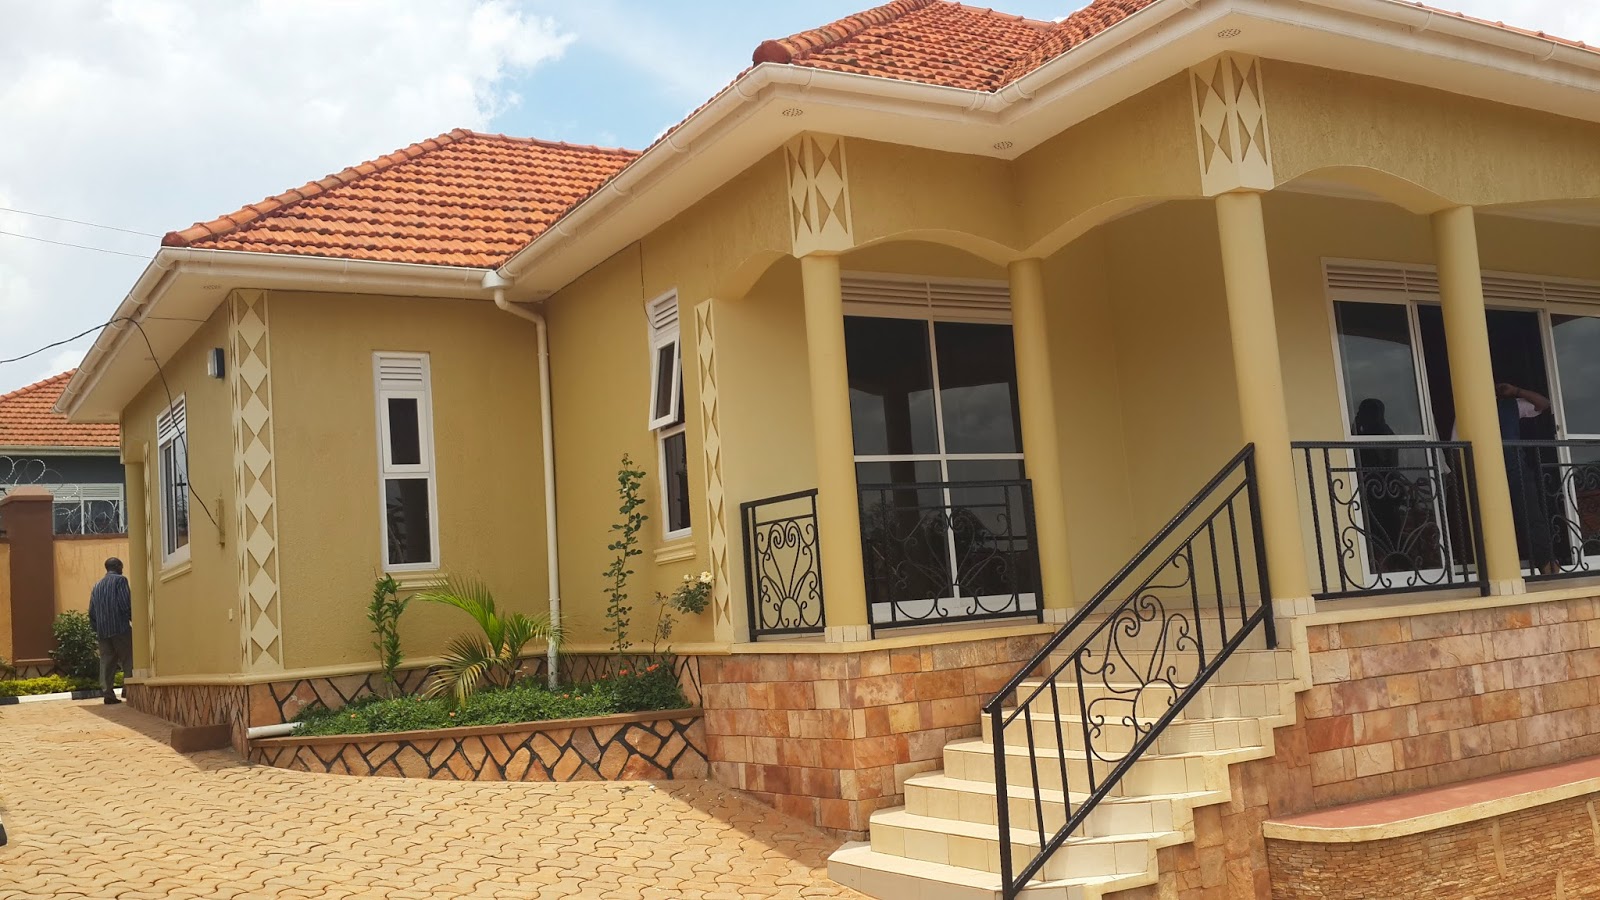 HOUSES FOR SALE KAMPALA UGANDA September 2014